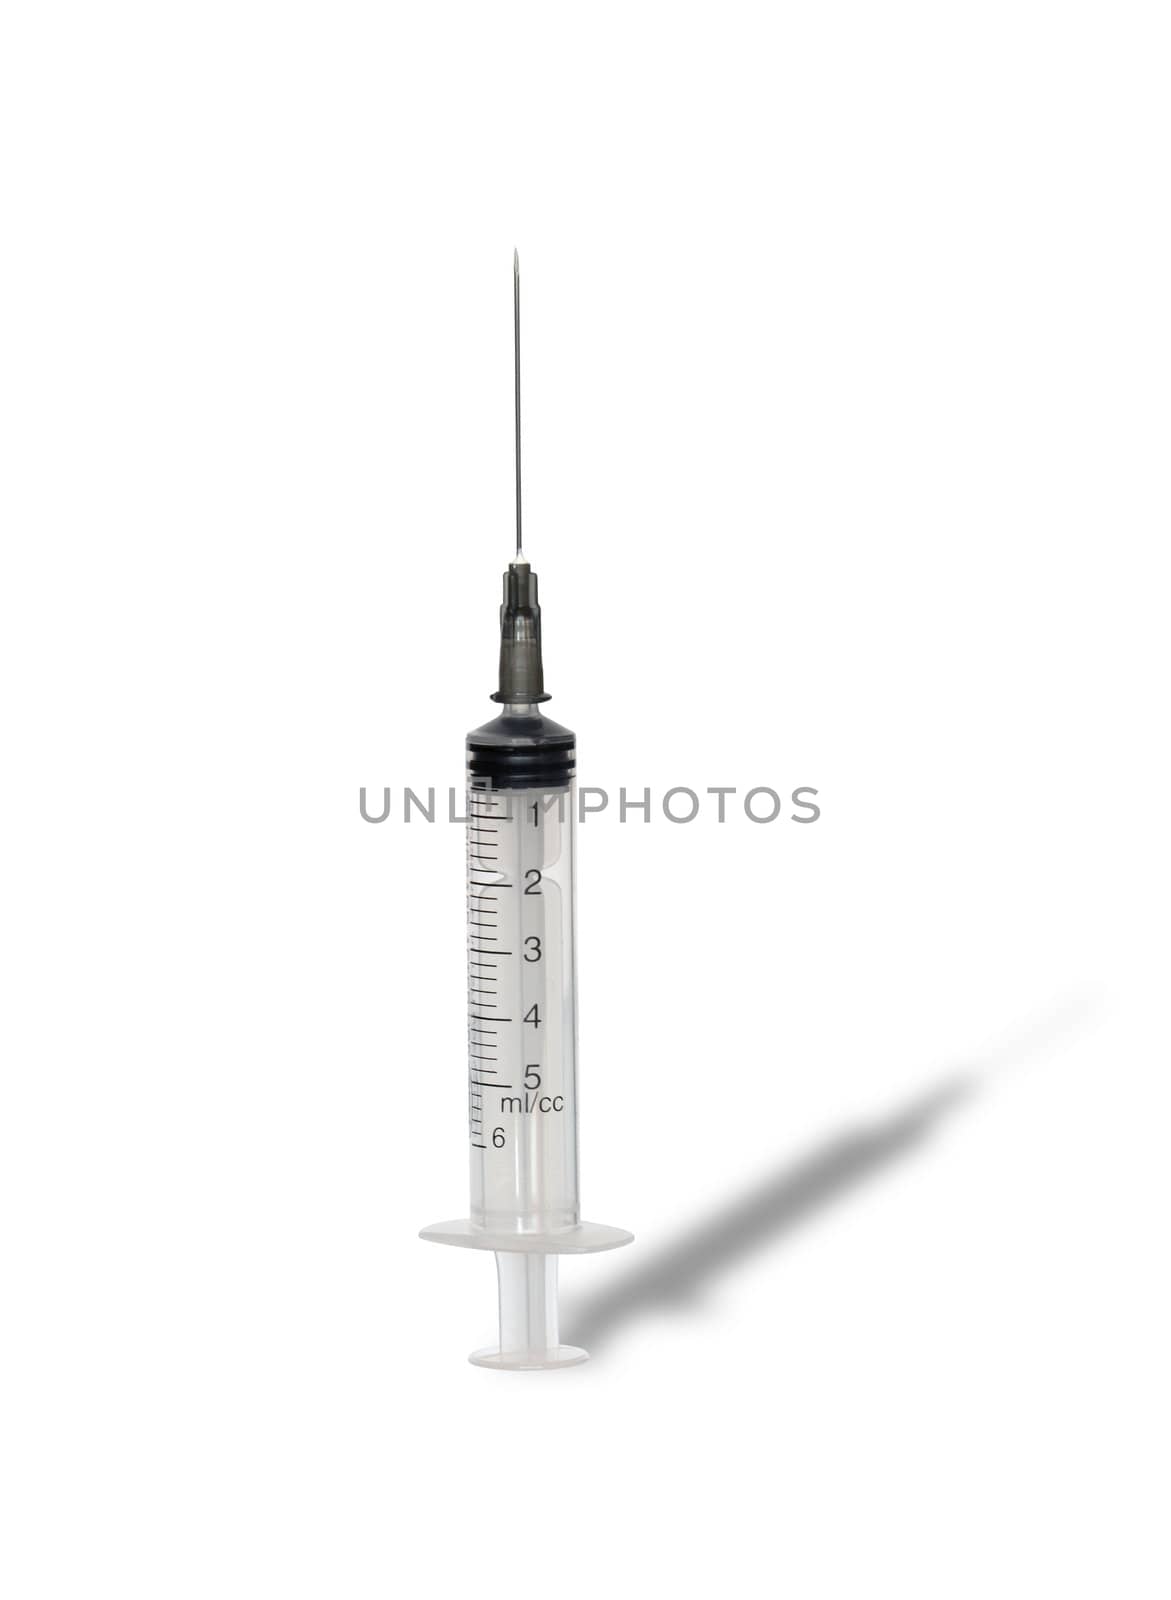 Syringe by kvkirillov